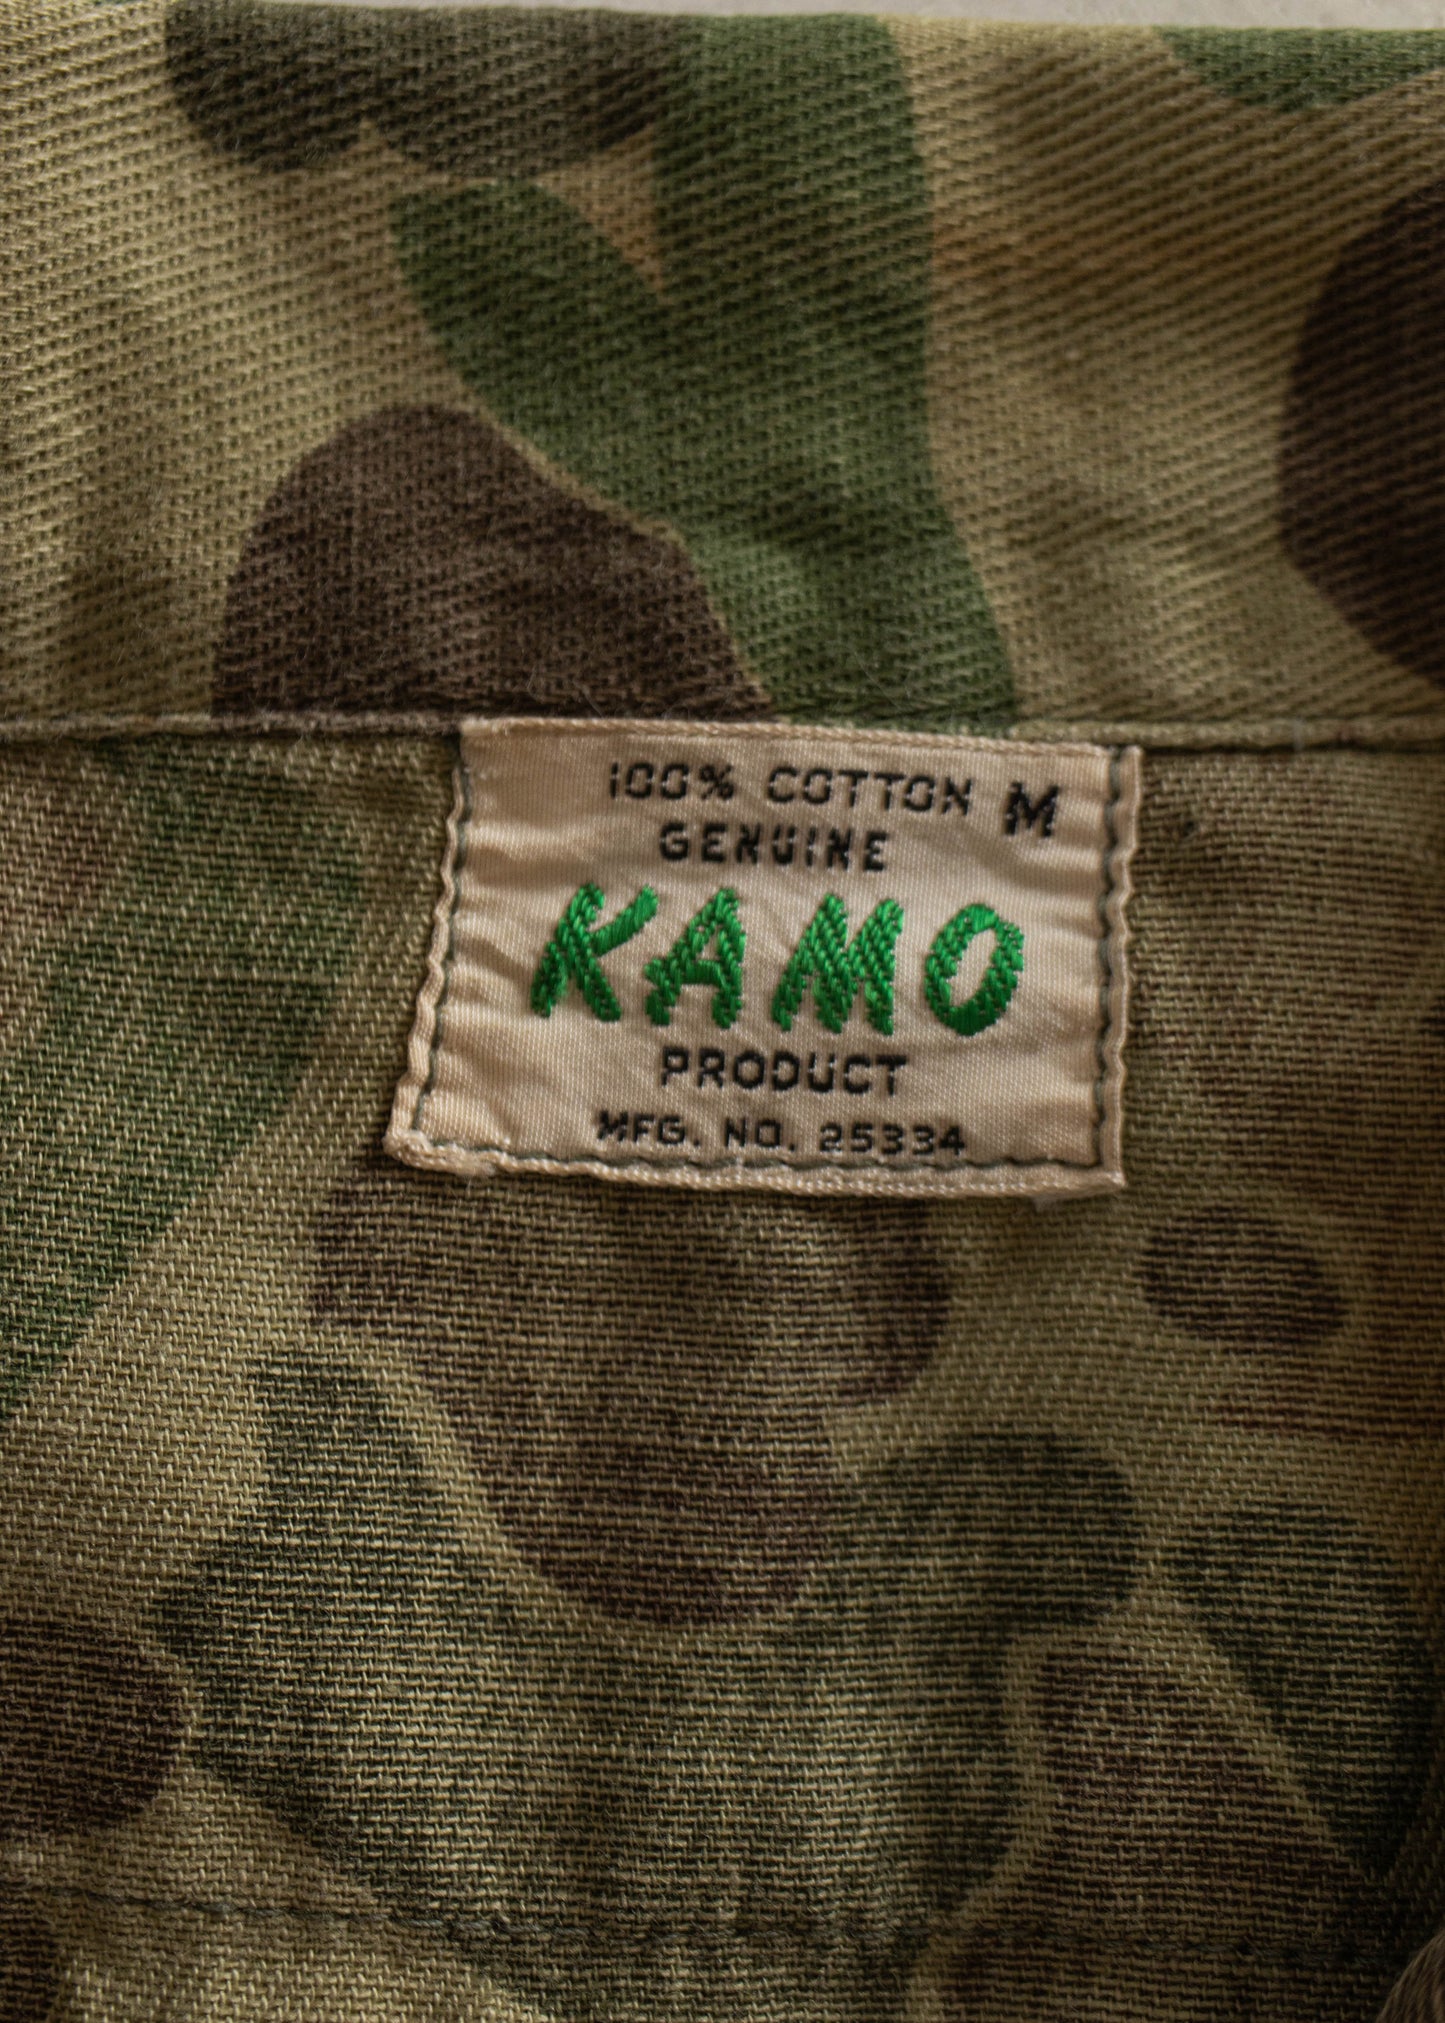 1980s Military Frog Camo Chore Coat Size S/M